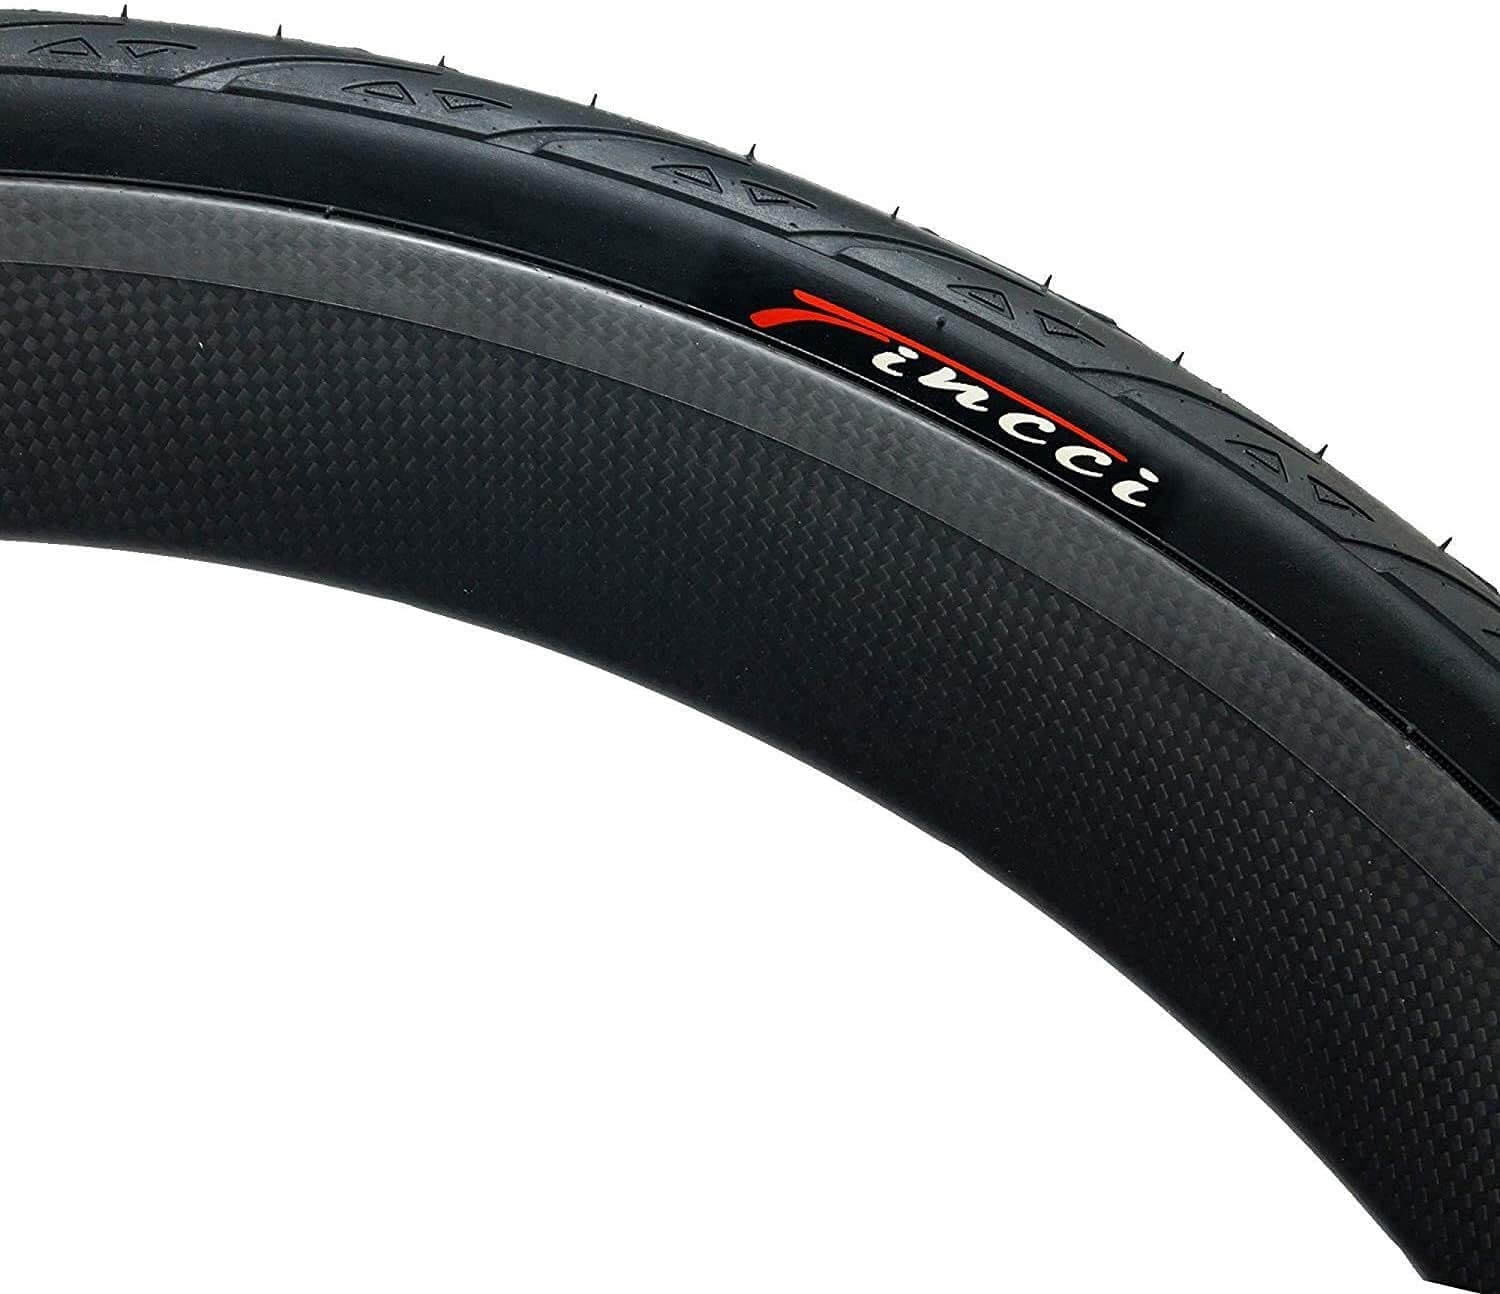 Fincci 700 x 25c 25622 Foldable Road Tyre 120TPI Buy in Online Shop